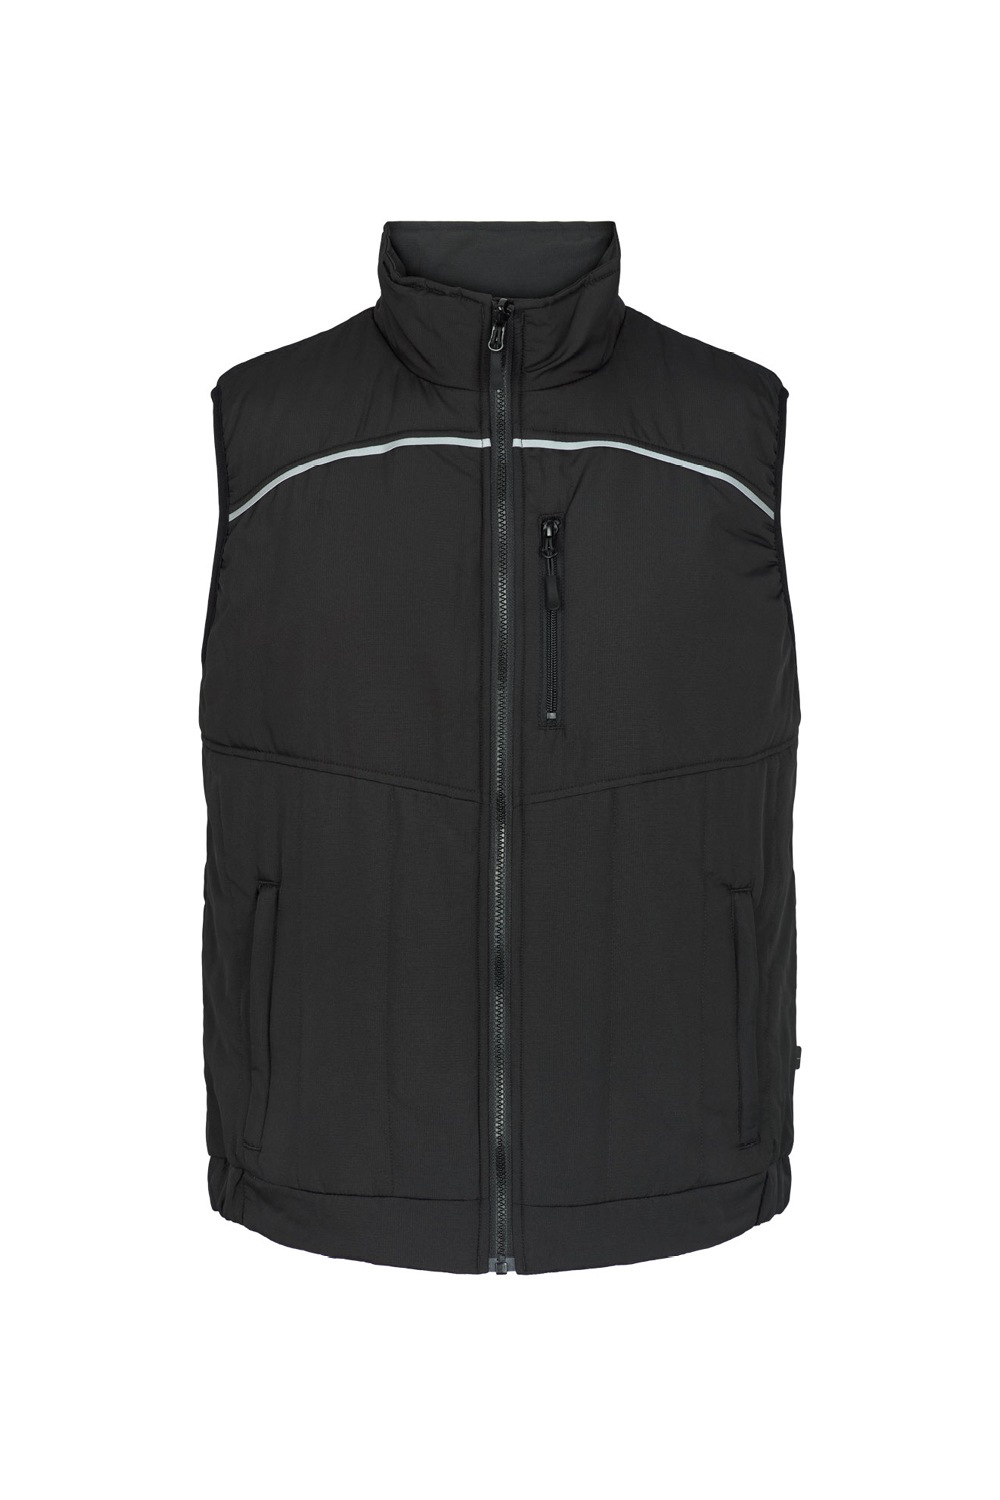 5900 xplor quilted waistcoat unisex black 9000 front